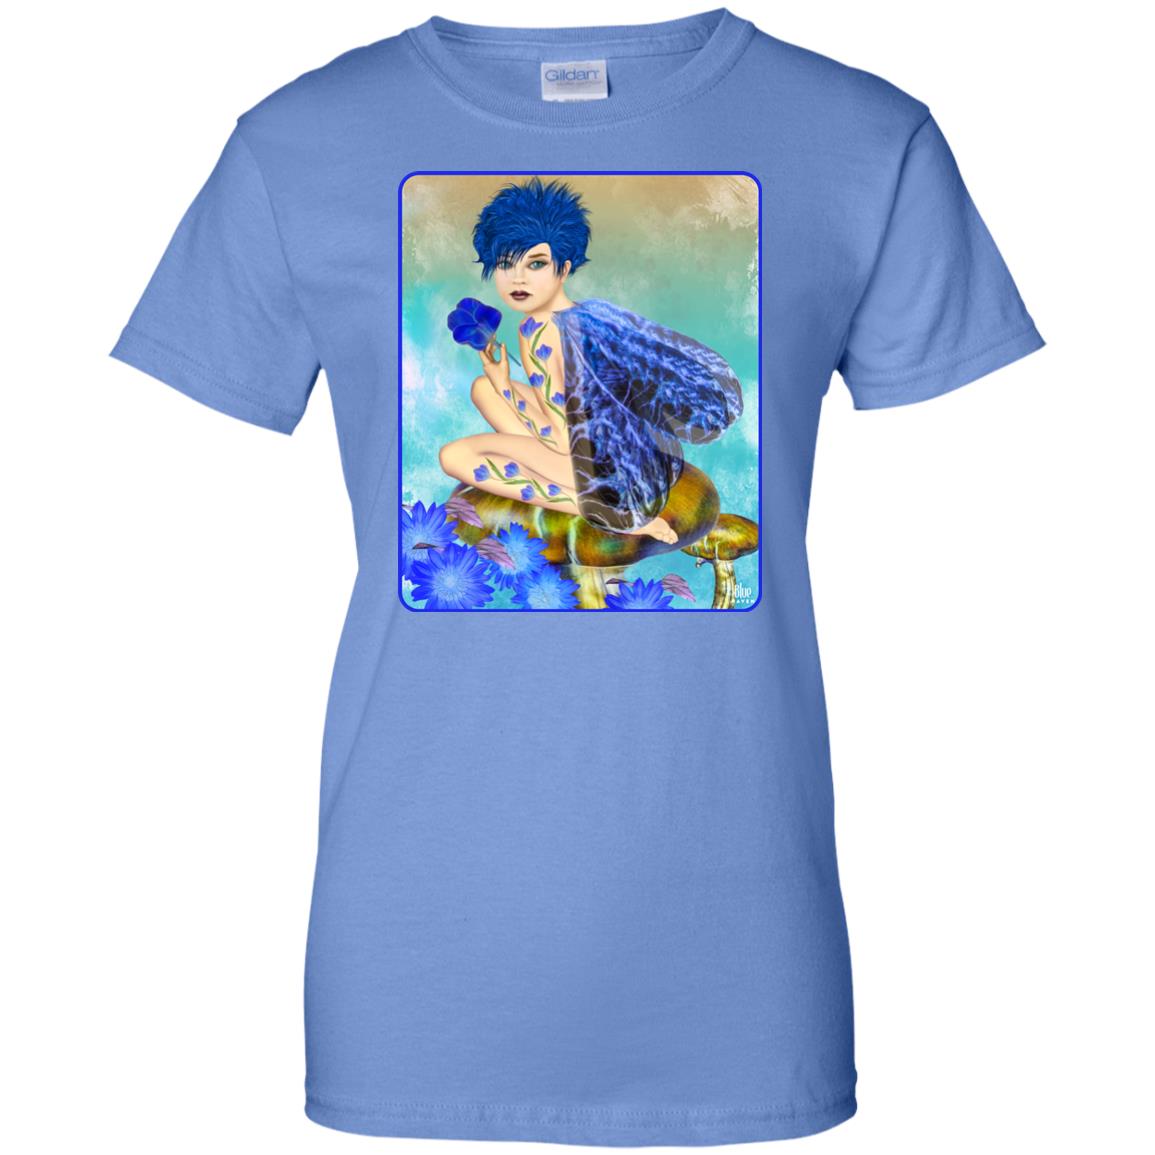 Blue Fairy 2 - Women's Relaxed Fit T-Shirt